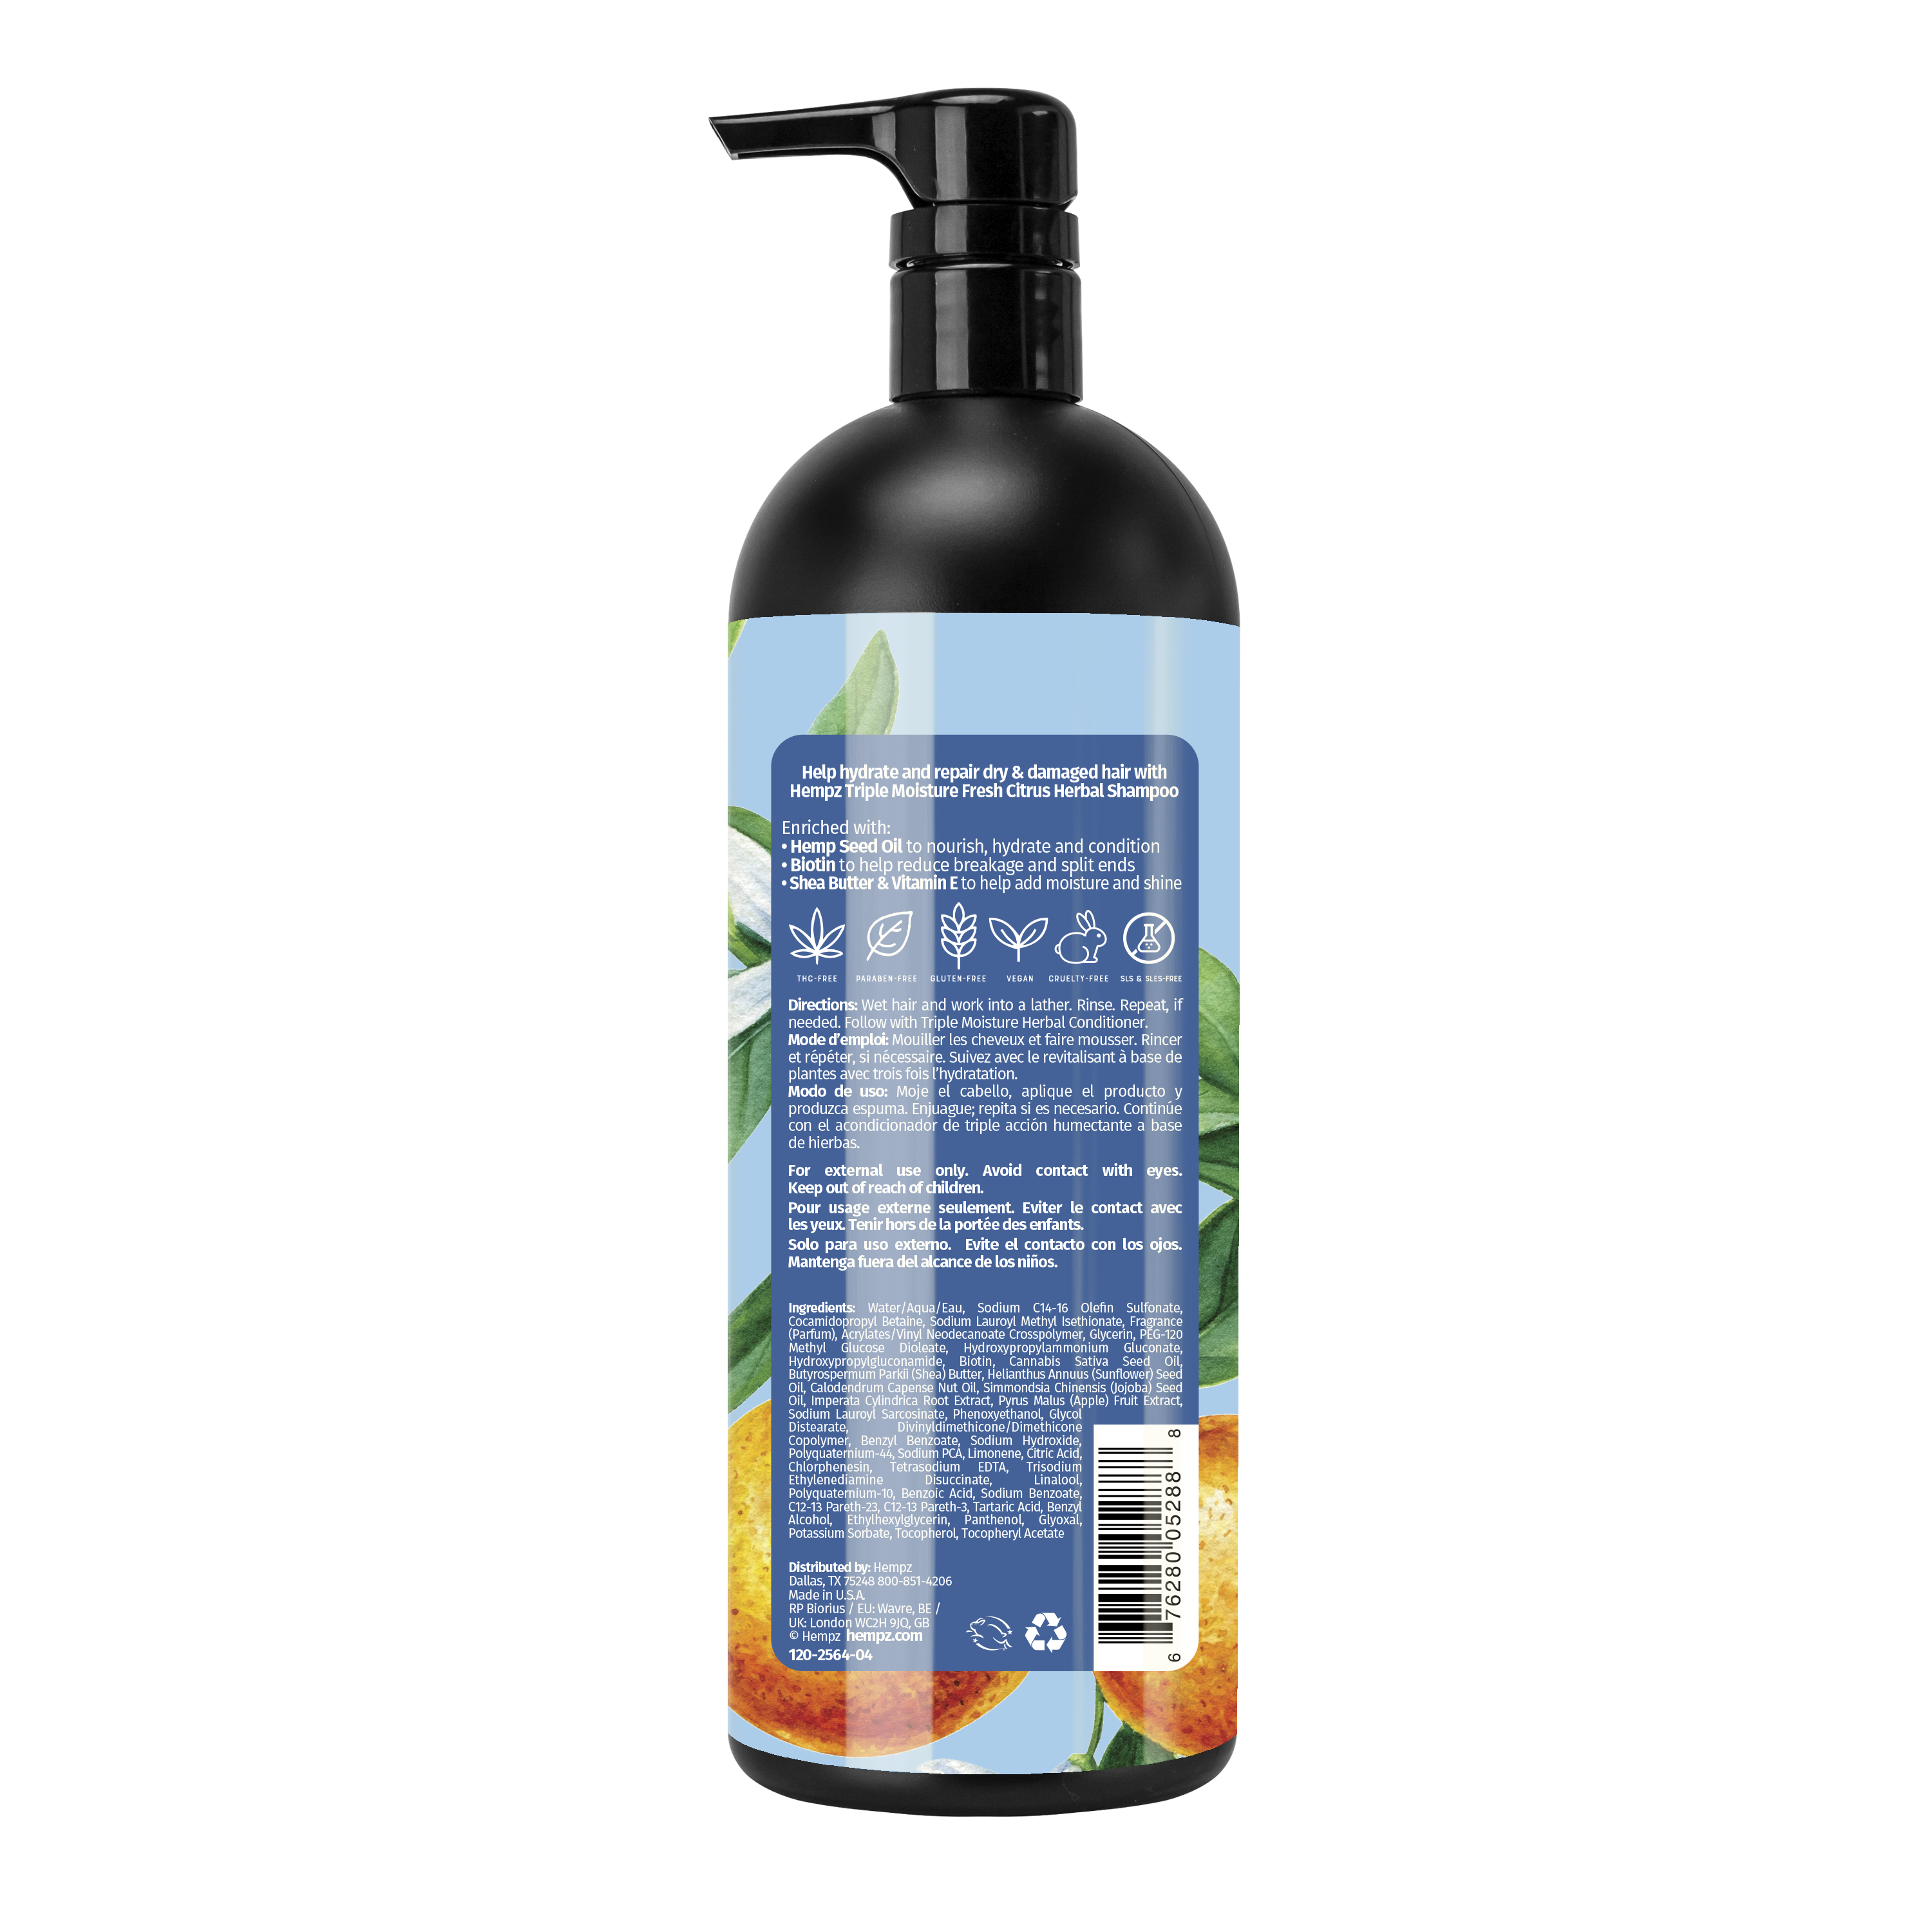 Hempz Triple Moisture Fresh Citrus Herbal Shampoo - Creata Beauty - Professional Beauty Products